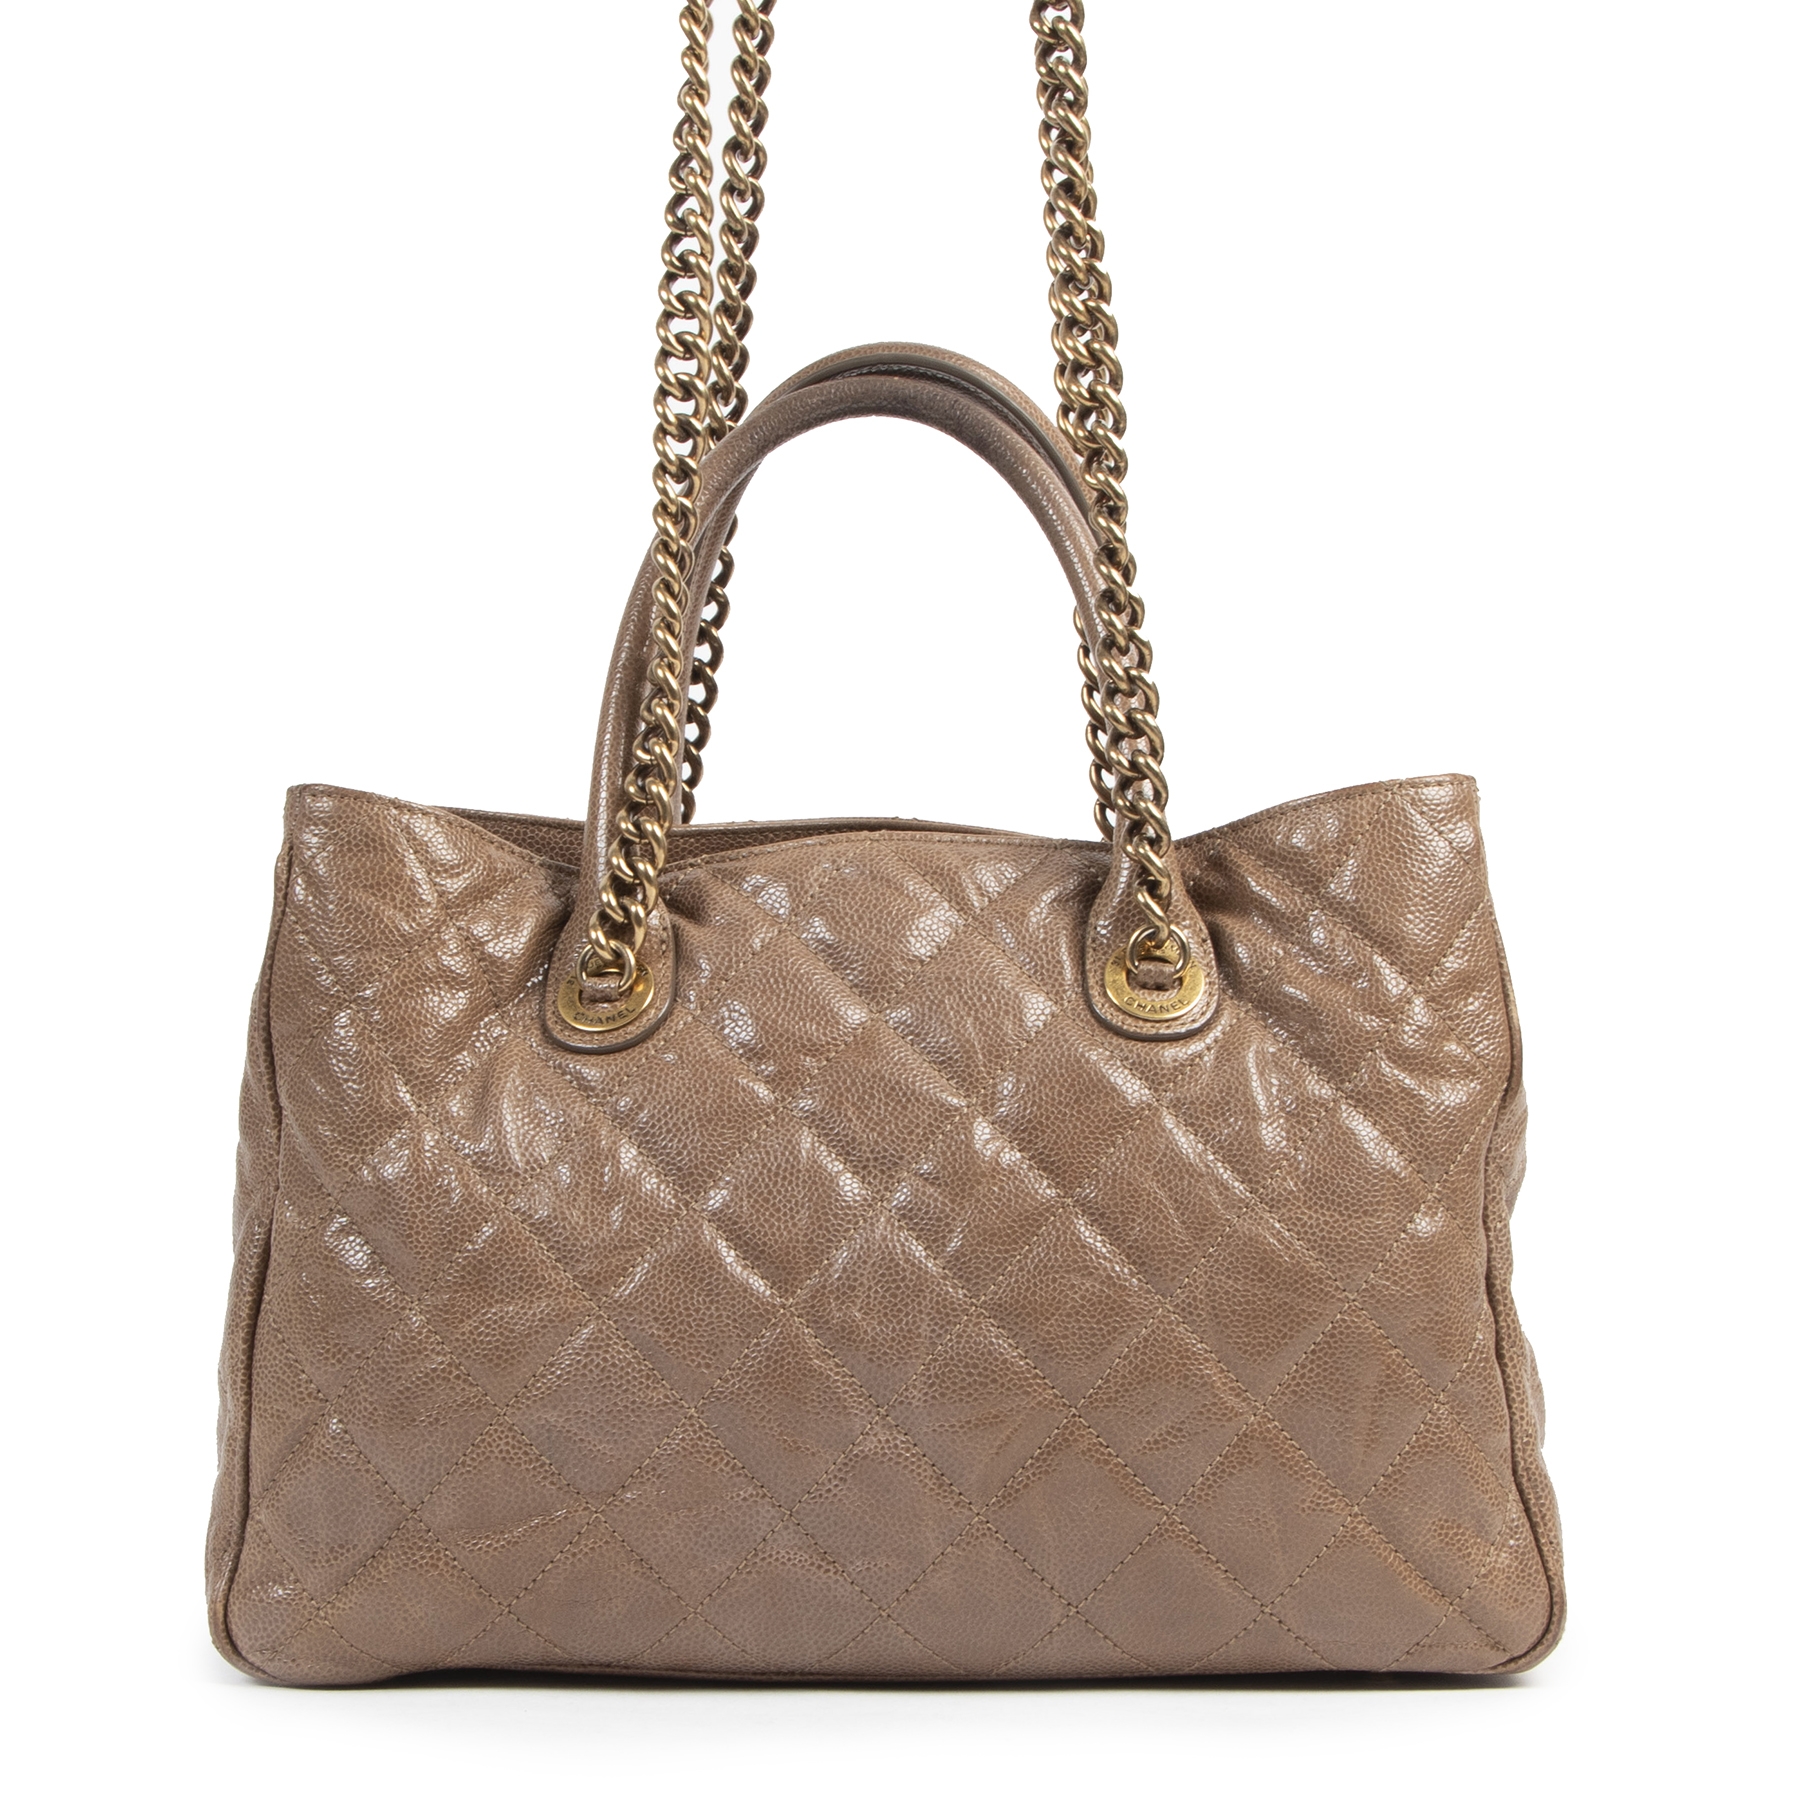 Labellov Shop Authentic Vintage Luxury Designer Handbags Online. Vind tweedehands designer ...